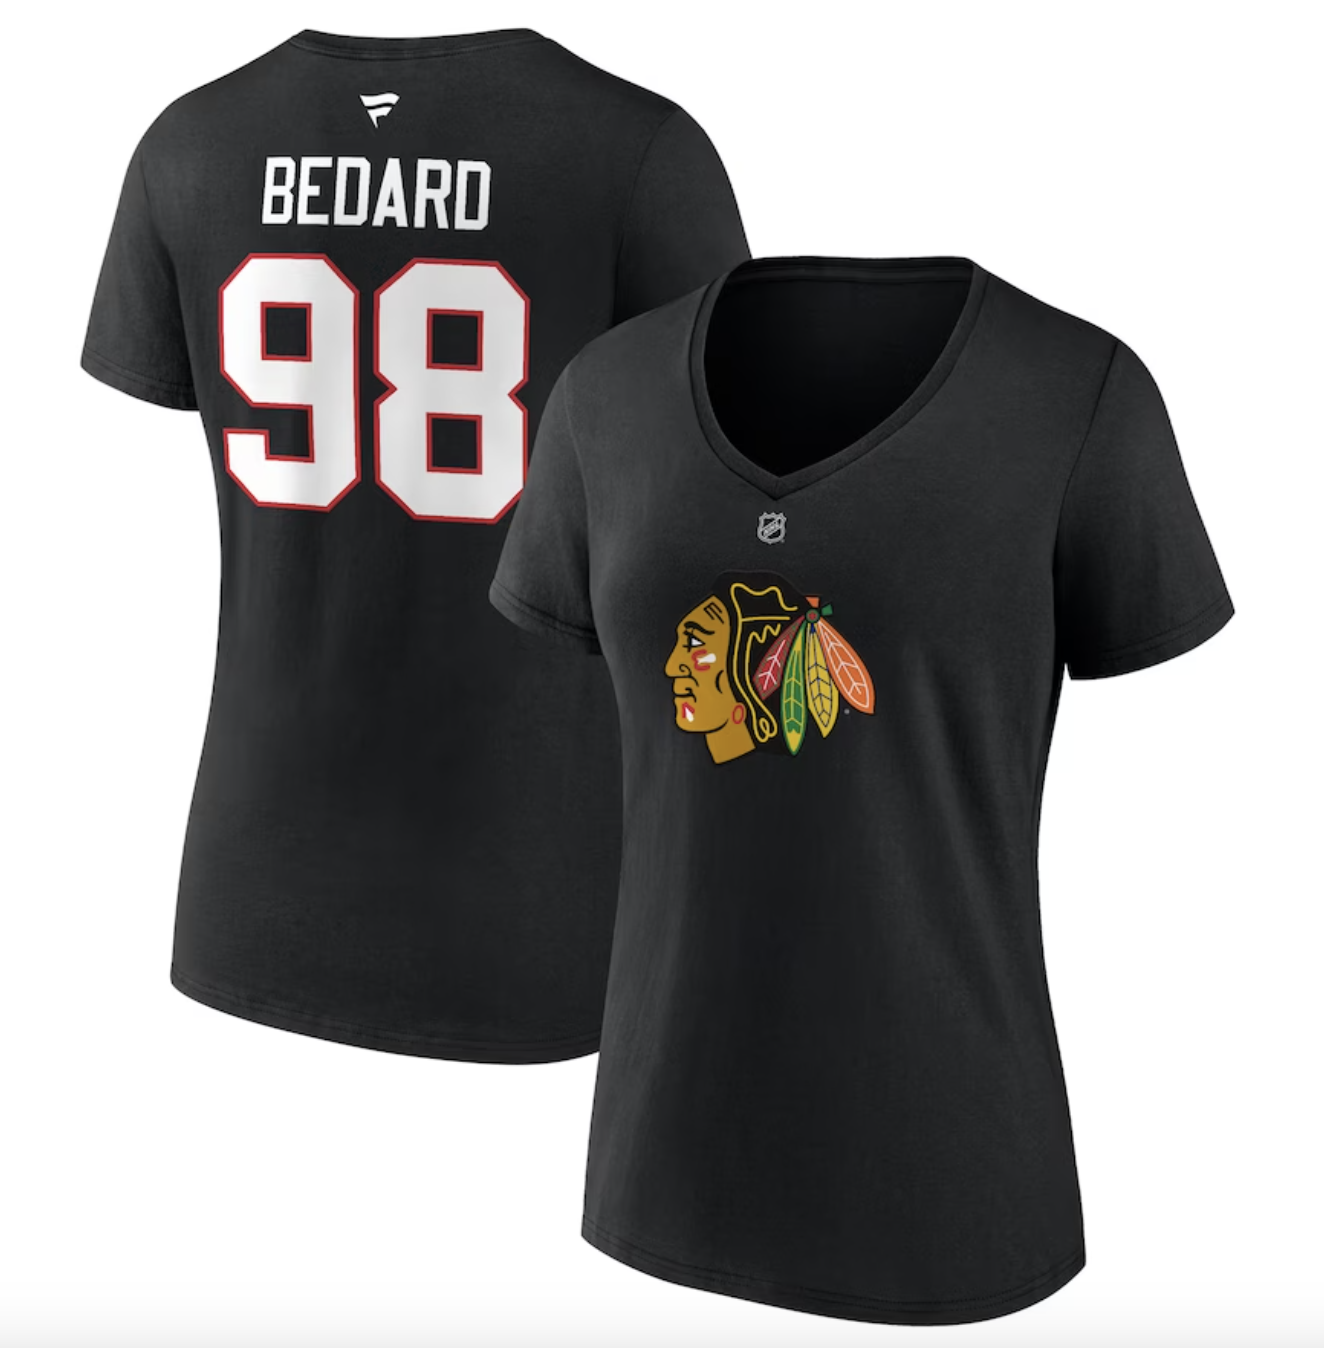 Connor Bedard Chicago Blackhawks Youth Black T-Shirt